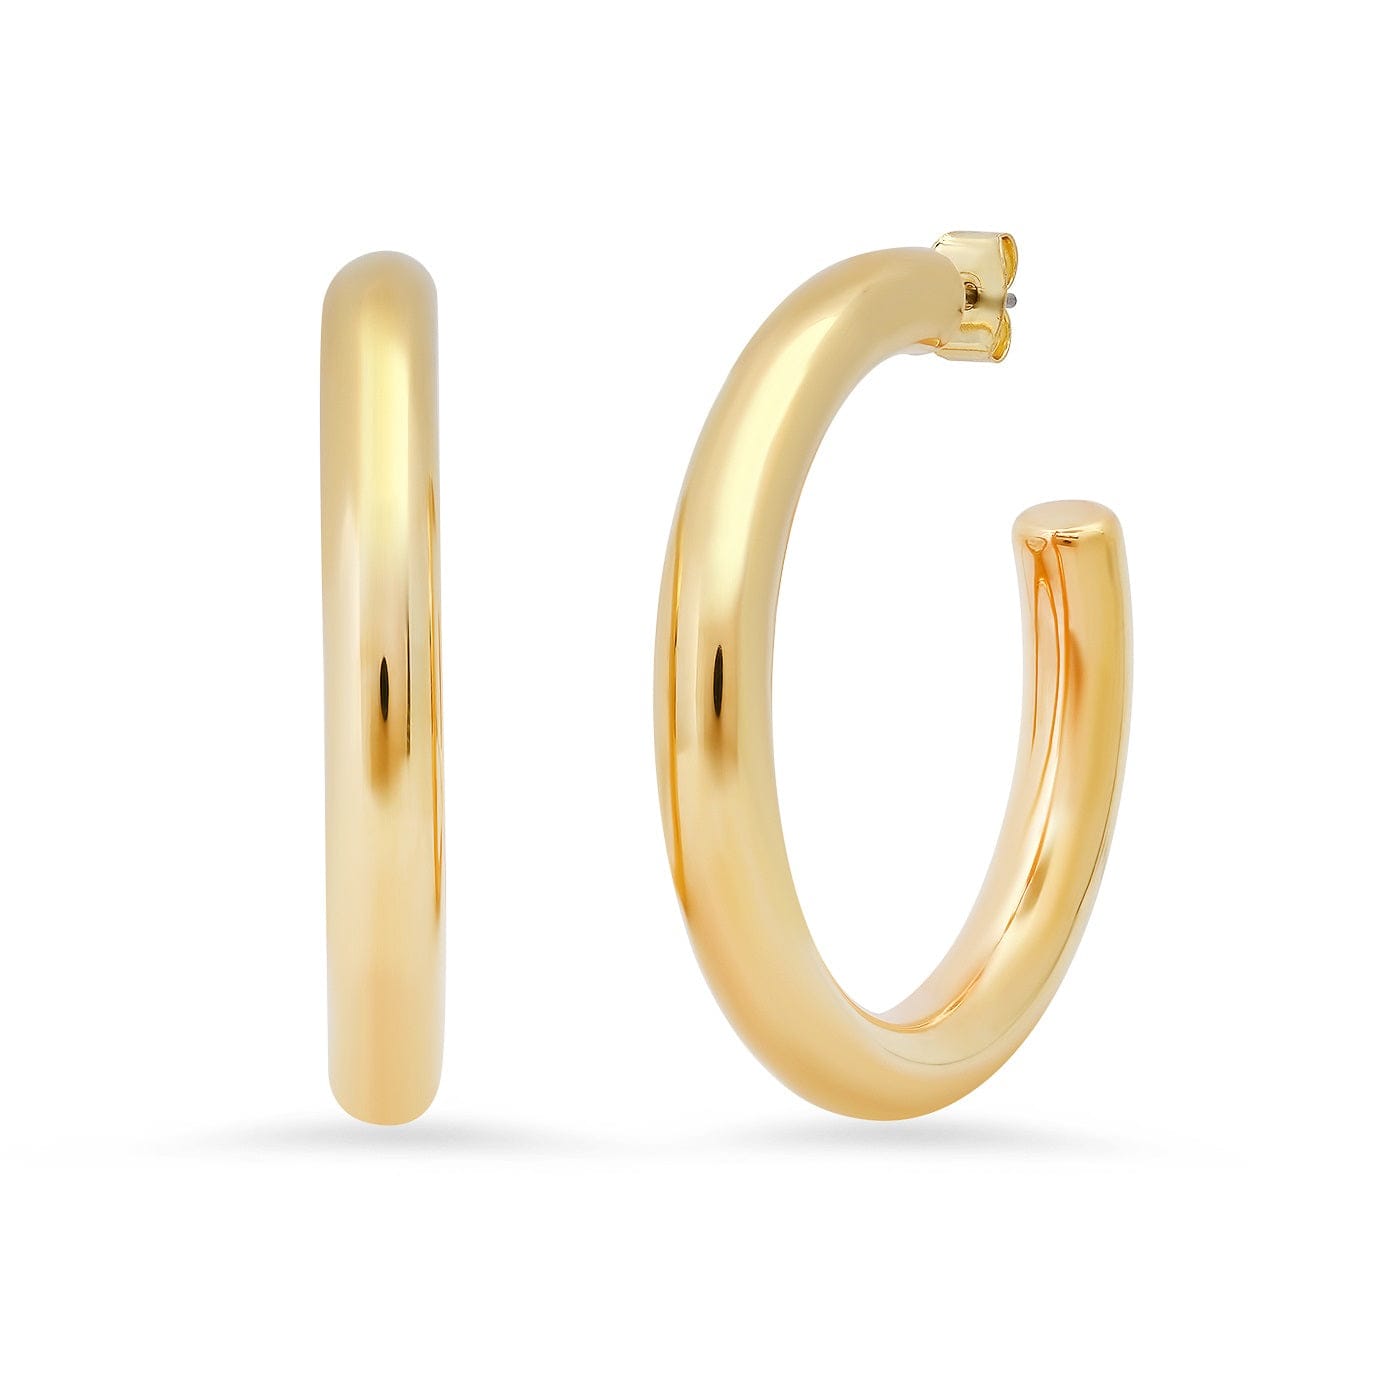 TAI JEWELRY Earrings Extra Large Gold Tubular Hoops